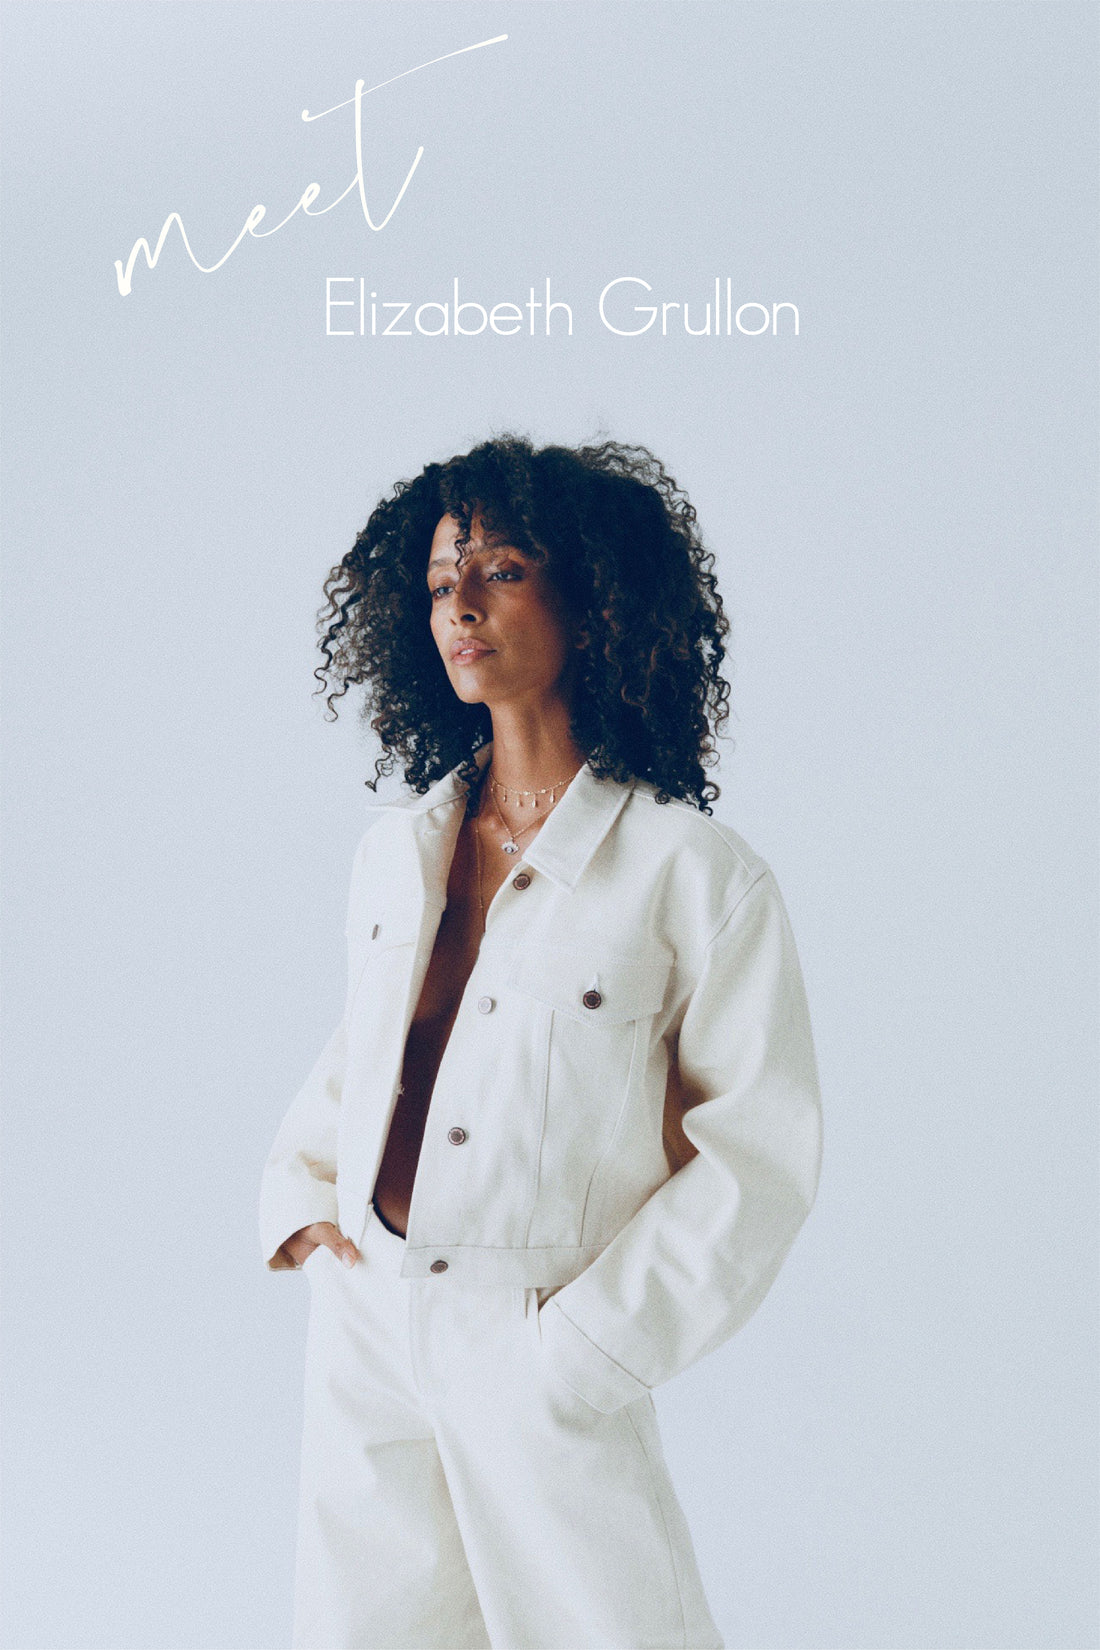 Elizabeth Grullon